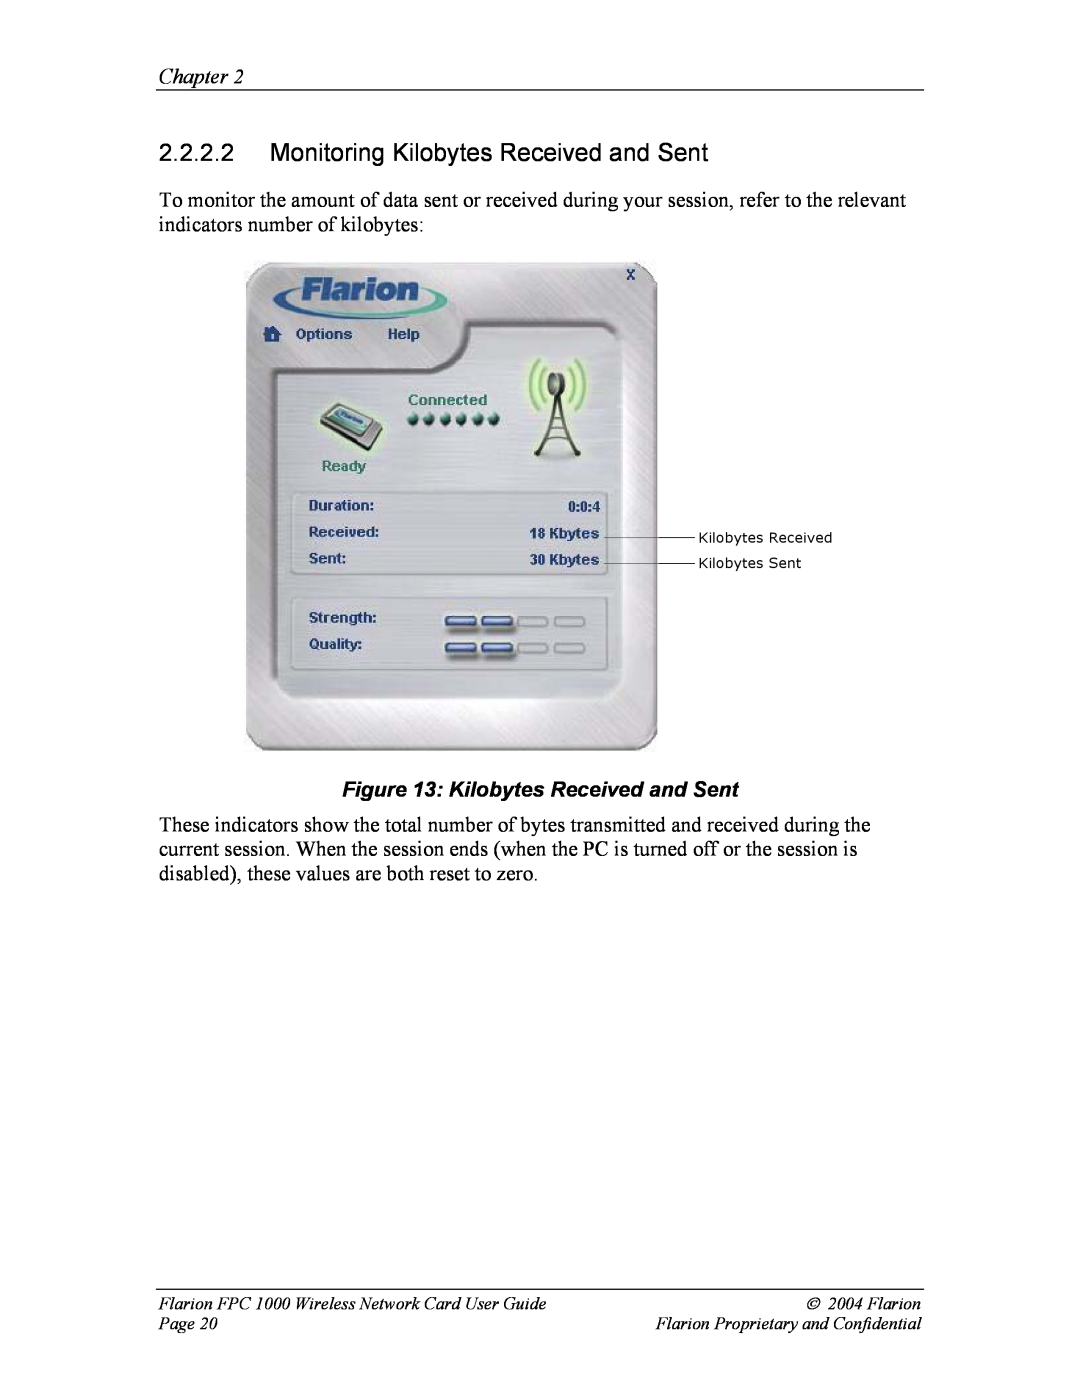 GE FPC 1000 manual Monitoring Kilobytes Received and Sent, Chapter 